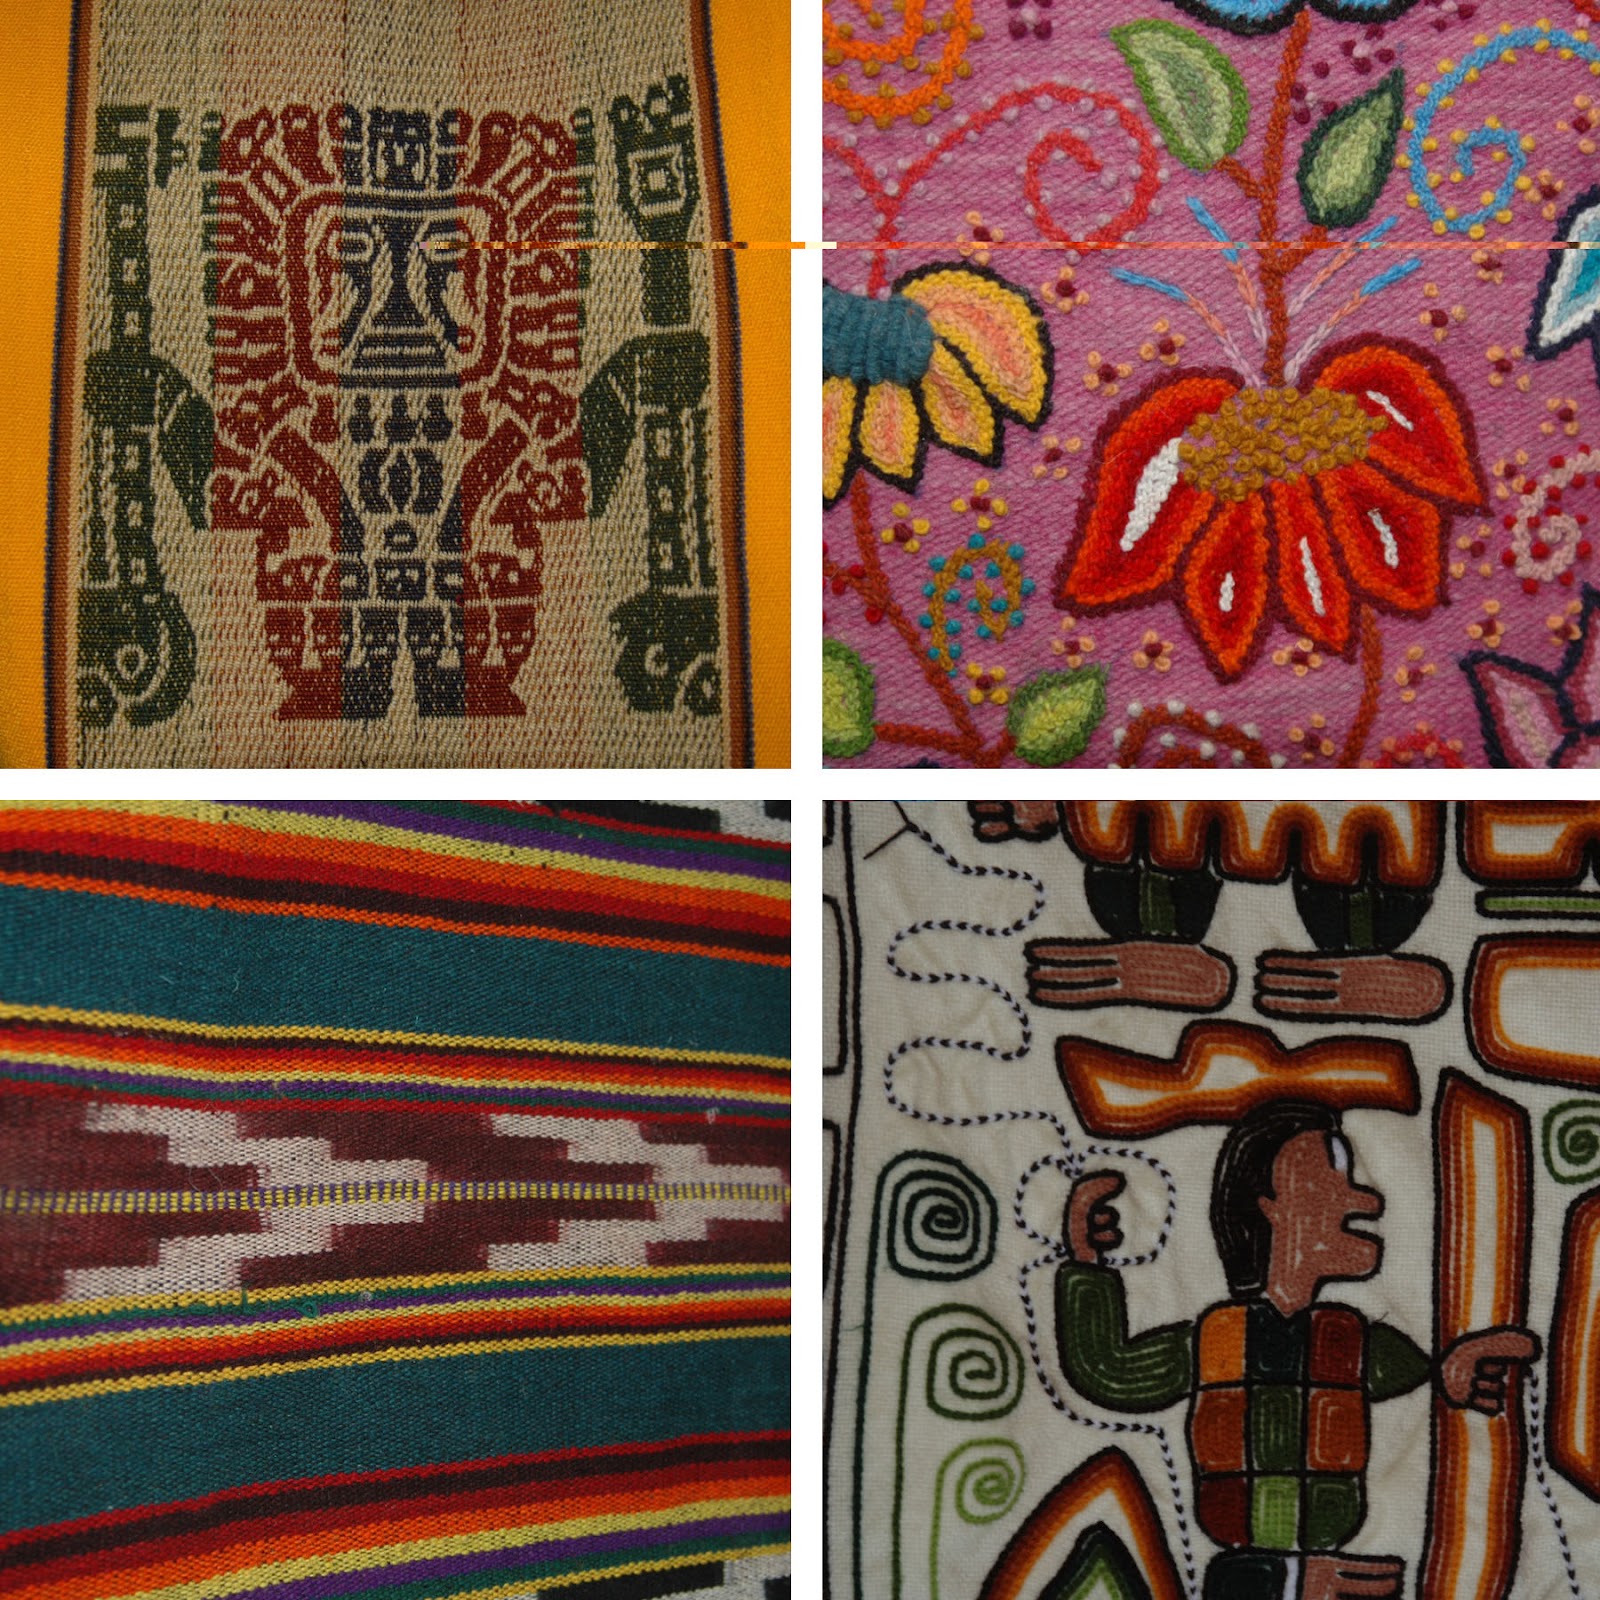 Peruvian Textiles - Knowmad Adventures